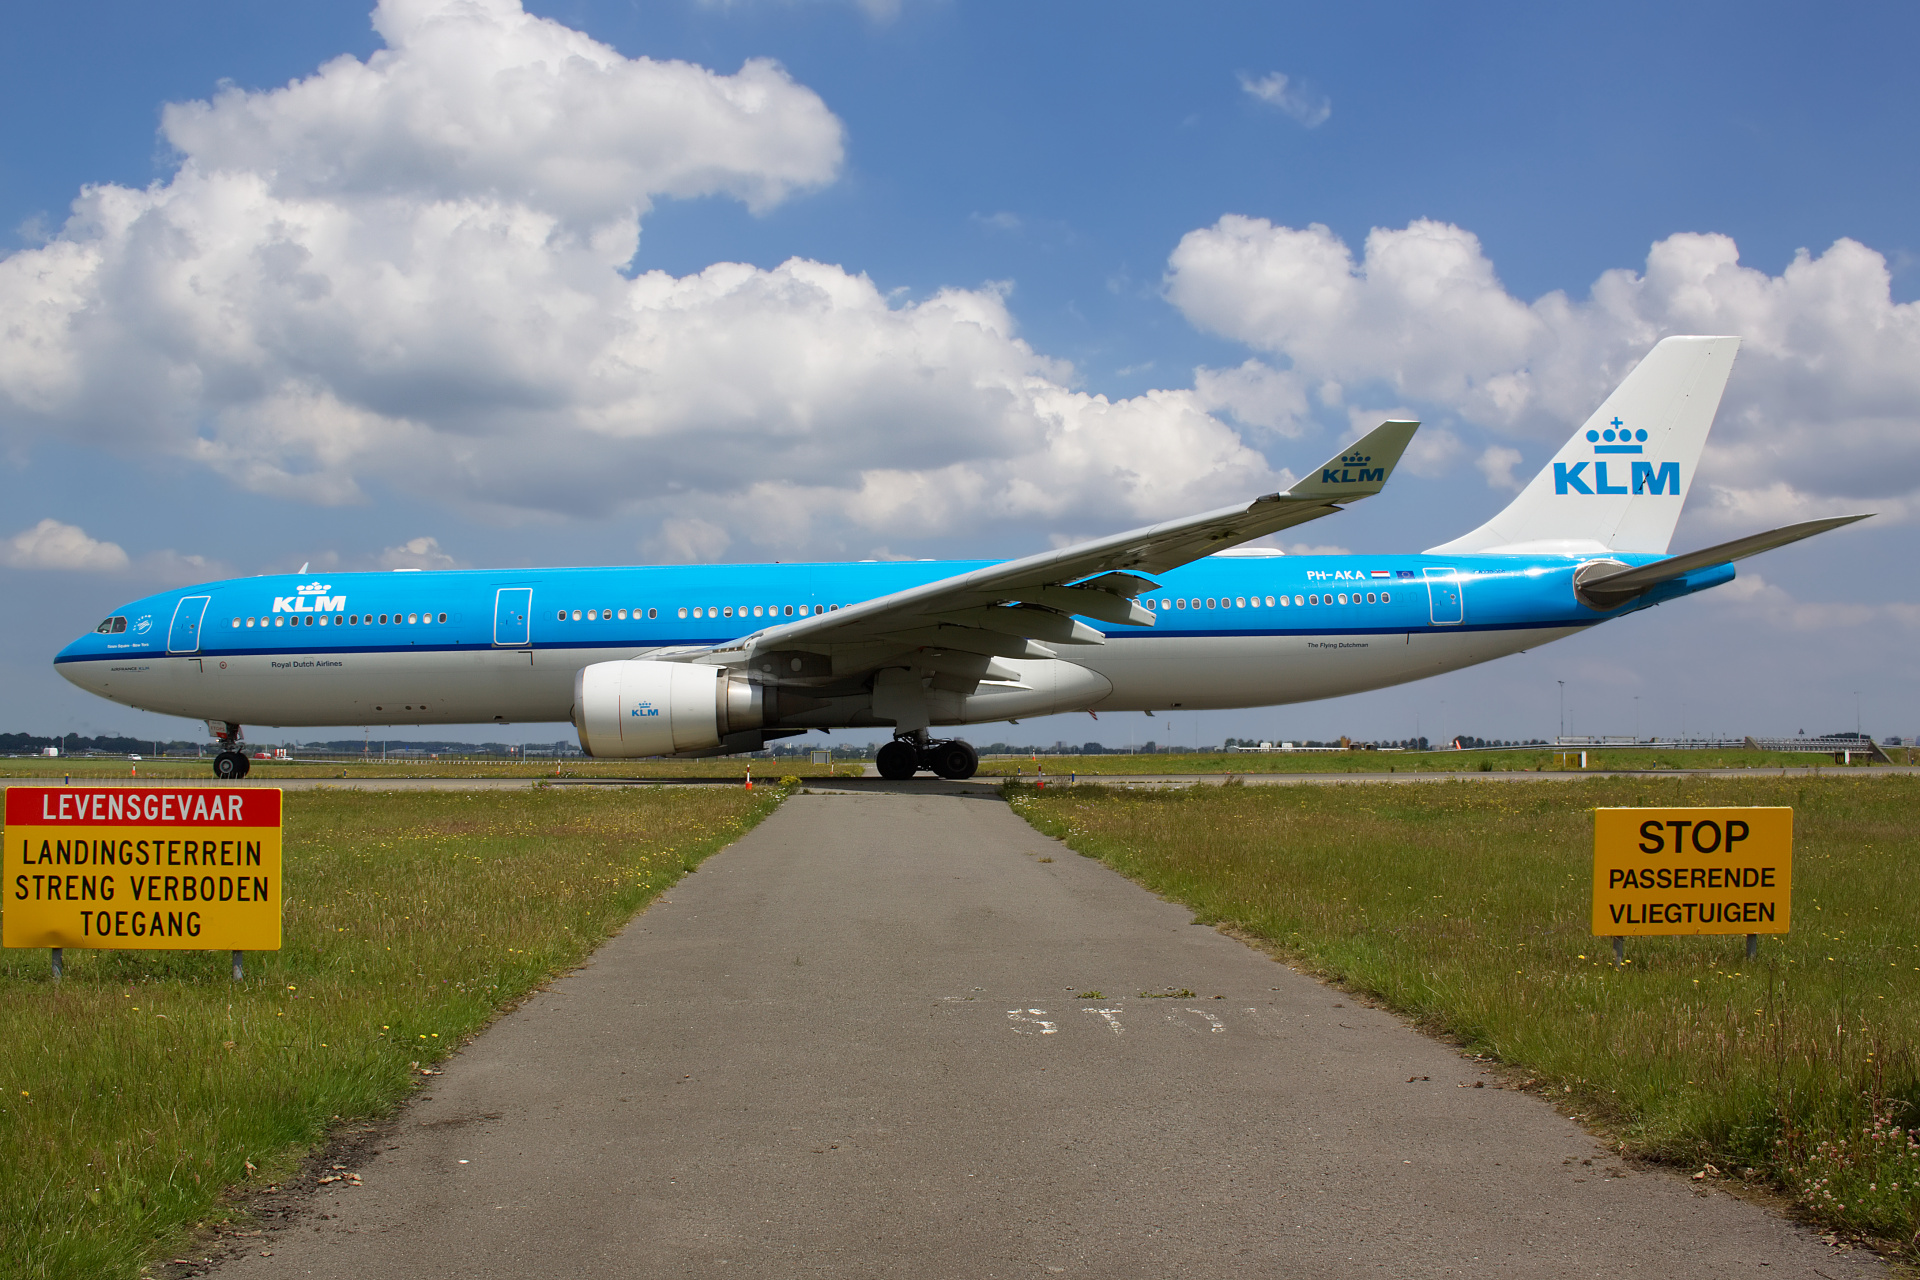 PH-AKA (Aircraft » Schiphol Spotting » Airbus A330-300 » KLM Royal Dutch Airlines)